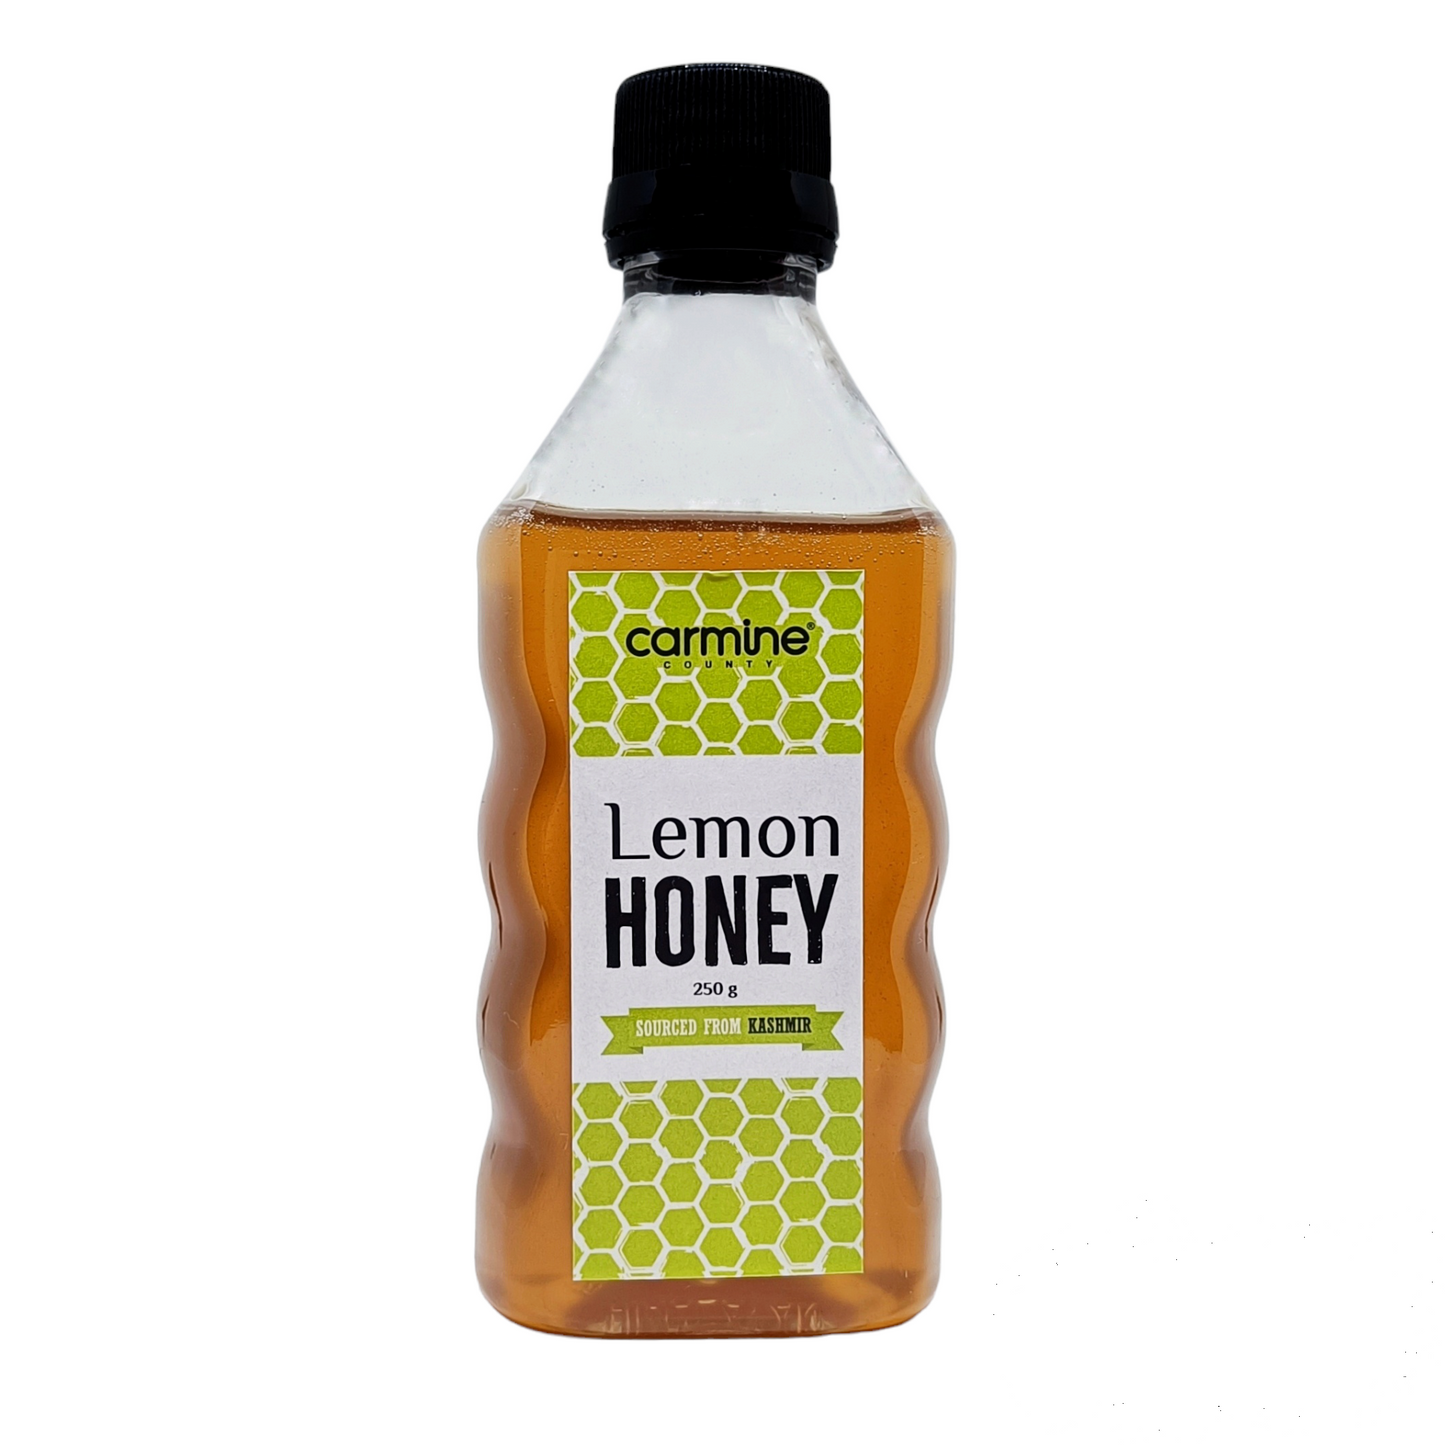 Carmine County All Natural Acacia Honey from Kashmir